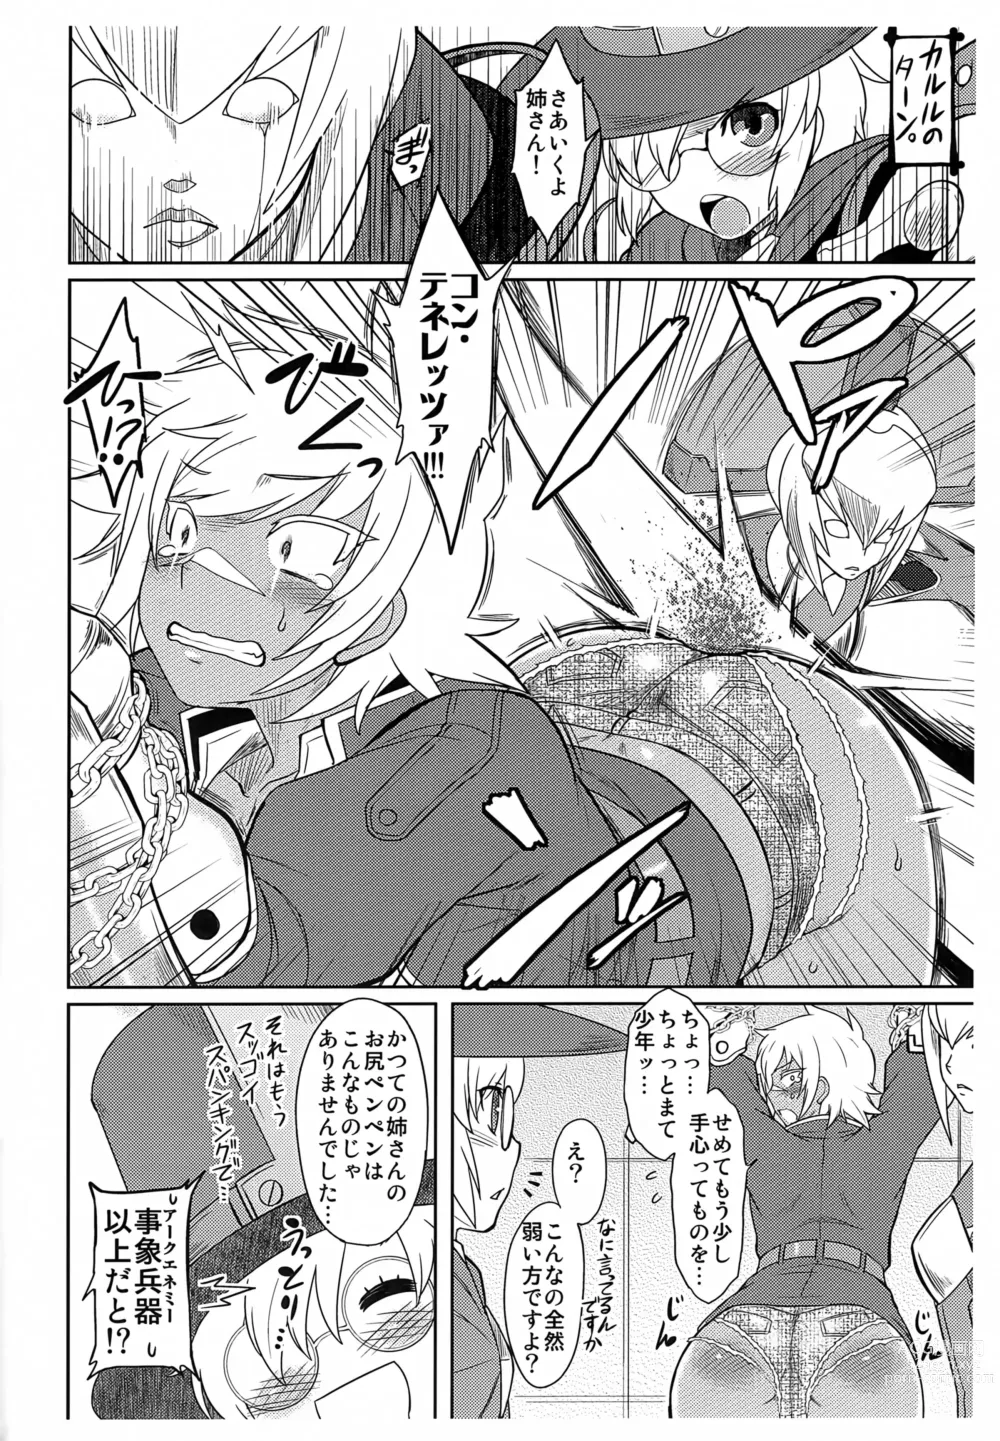 Page 6 of doujinshi Bullet-san o Ijimetai.